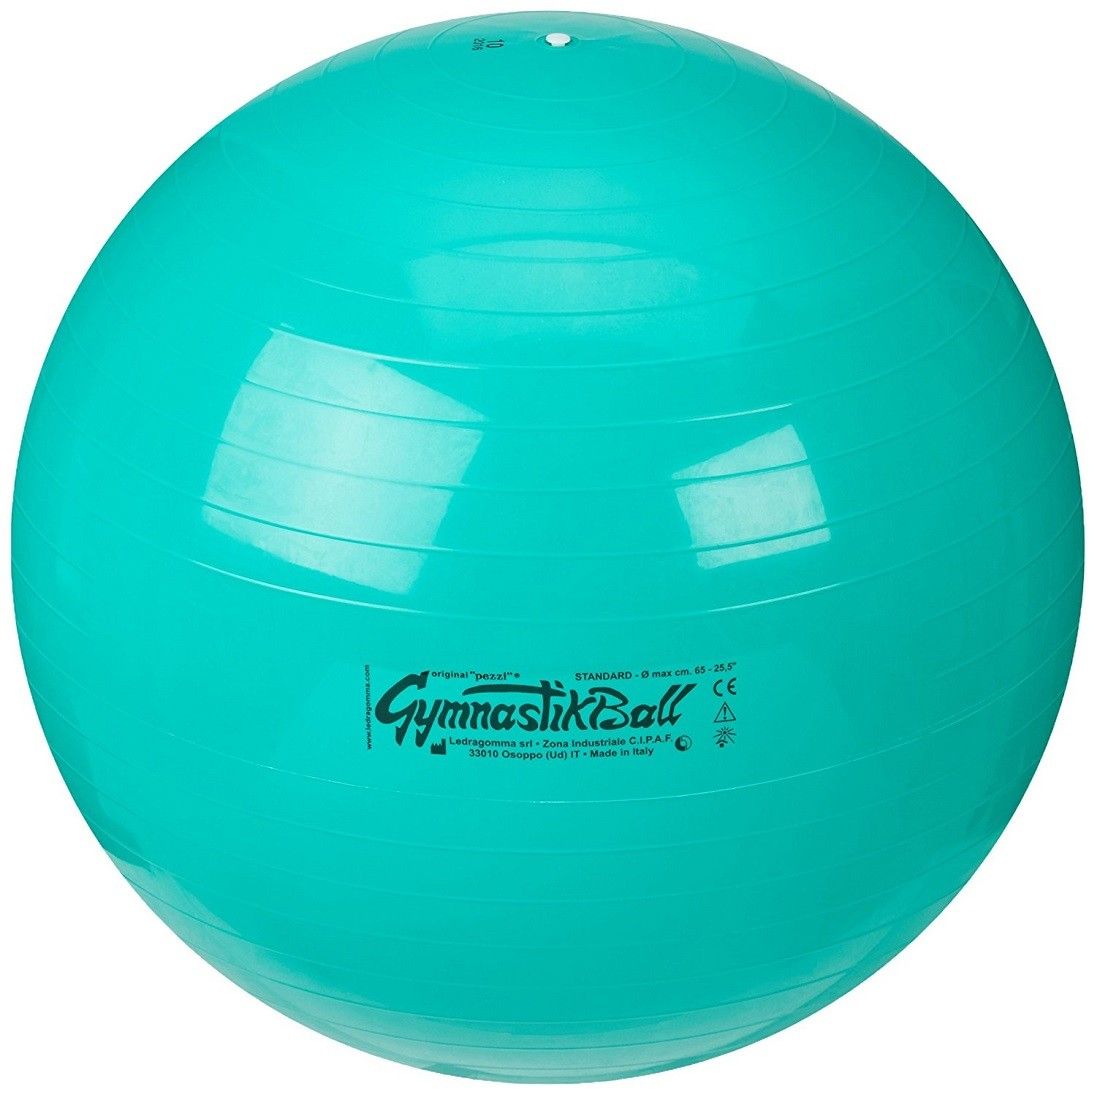 Pezzi®-Ball Original Gymnastikball mit Übungsanleitung